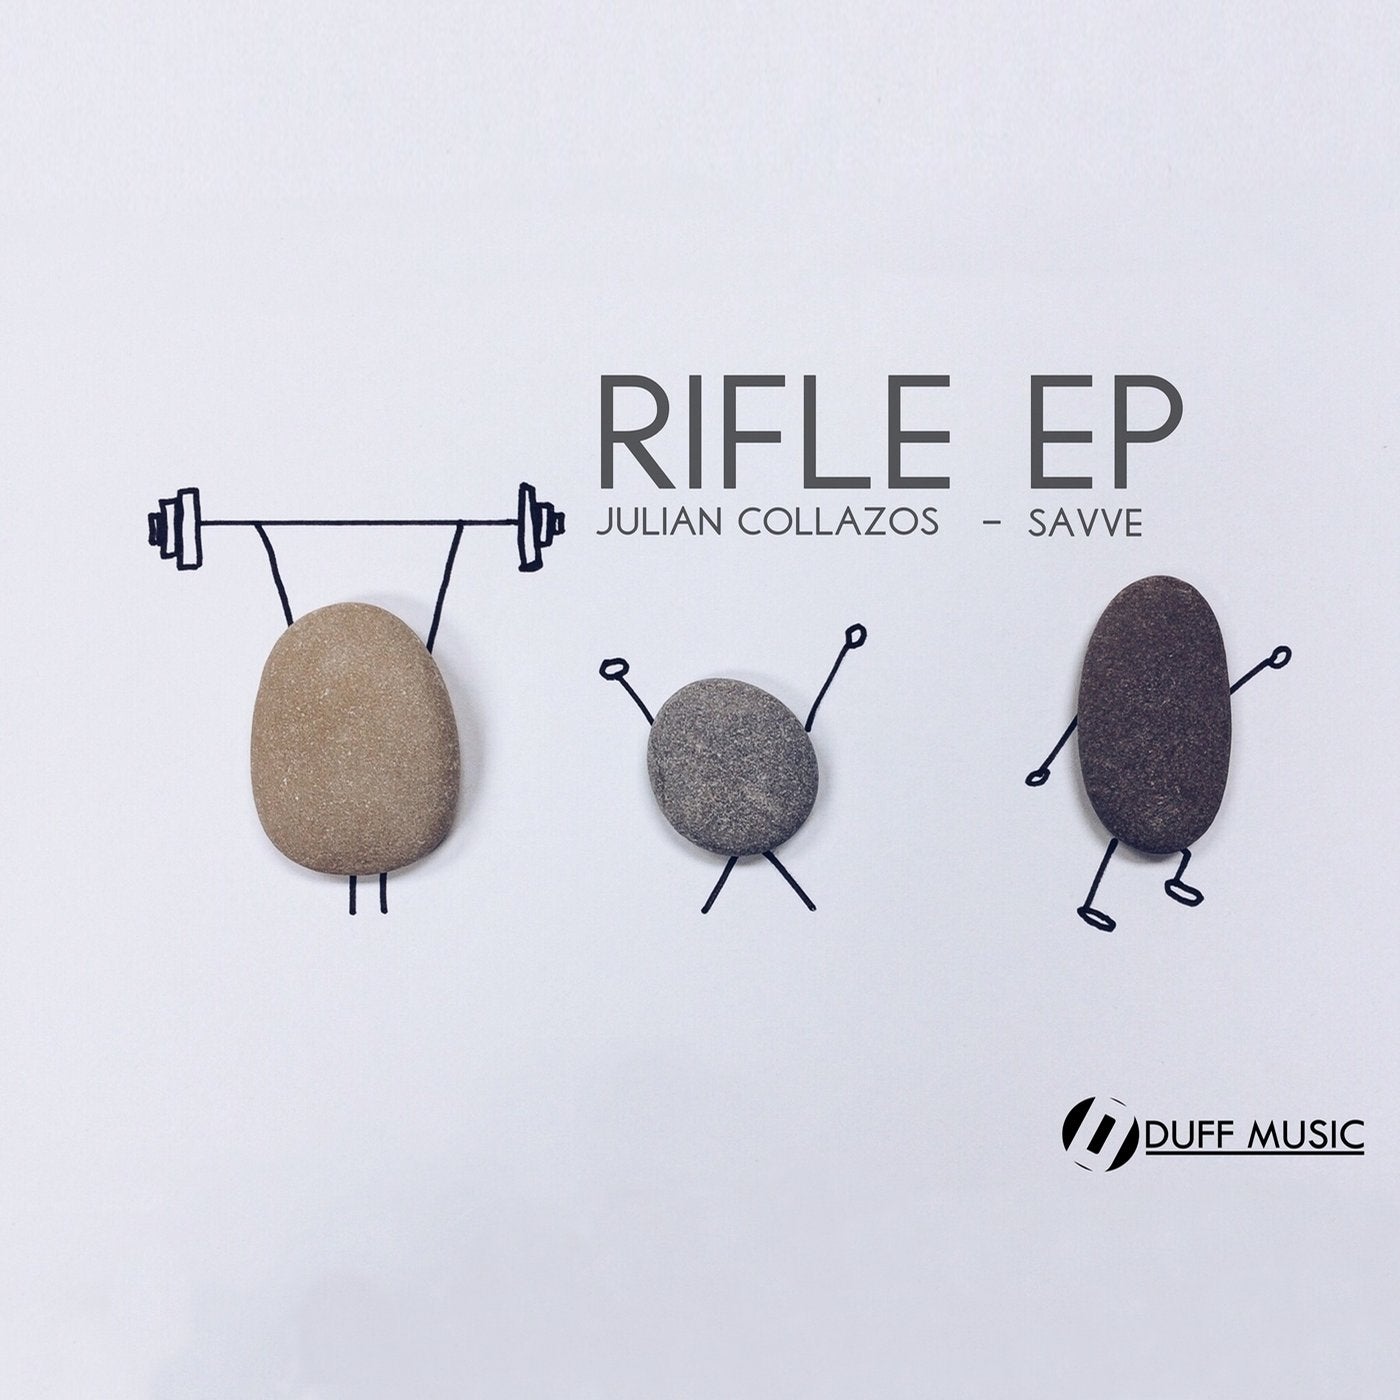 Rifle EP